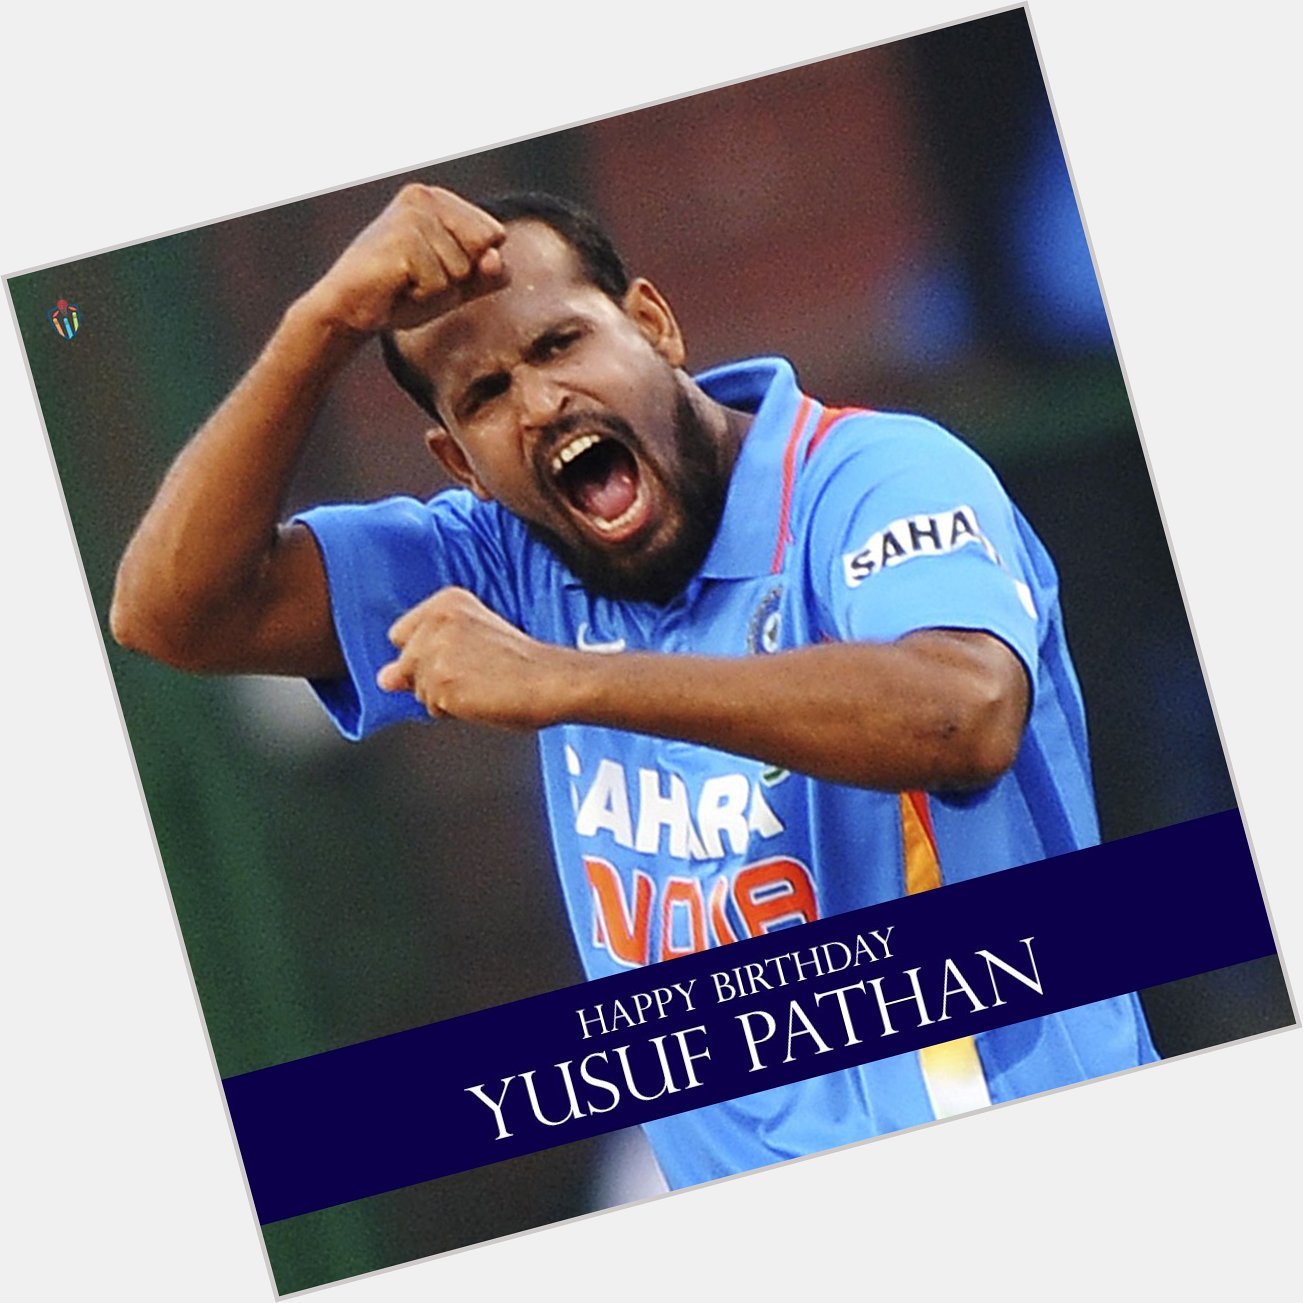 Happy birthday, Yusuf Pathan. 